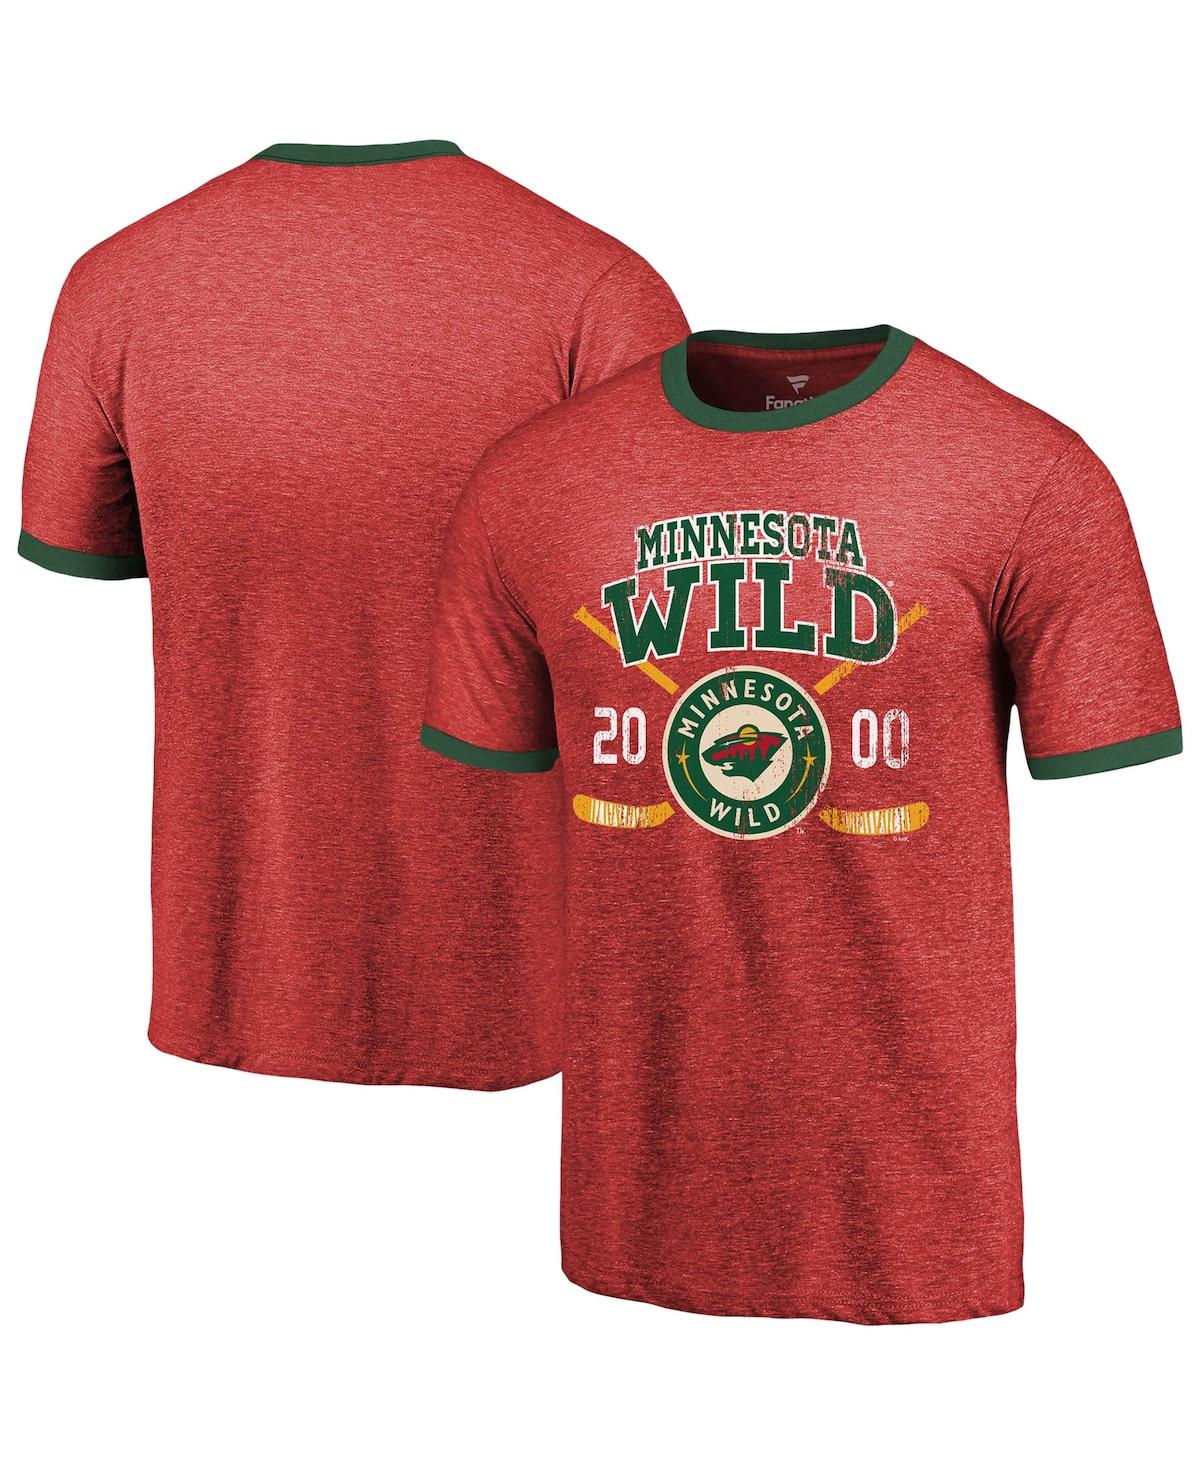 Men's Majestic Threads Red Minnesota Wild Buzzer Beater Tri-Blend Ringer T-shirt - Red